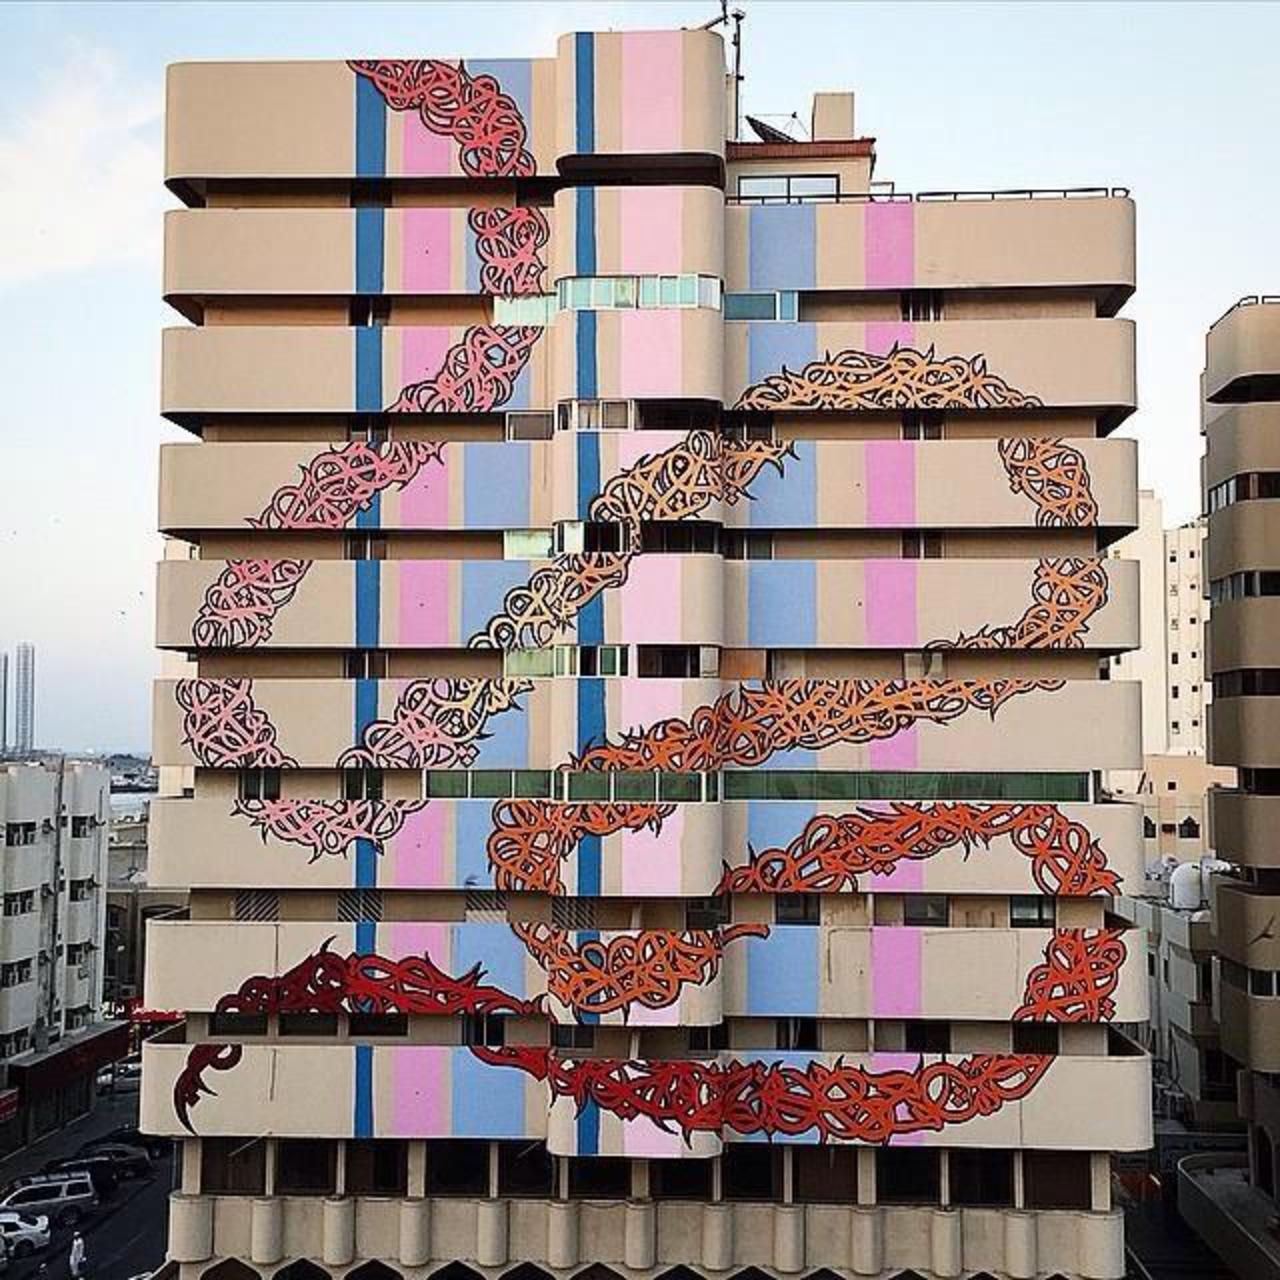 Excellent large scale Street Art mural by the artist 'eL seed'

#art #arte #graffiti #streetart http://t.co/Z5g8MszNOb